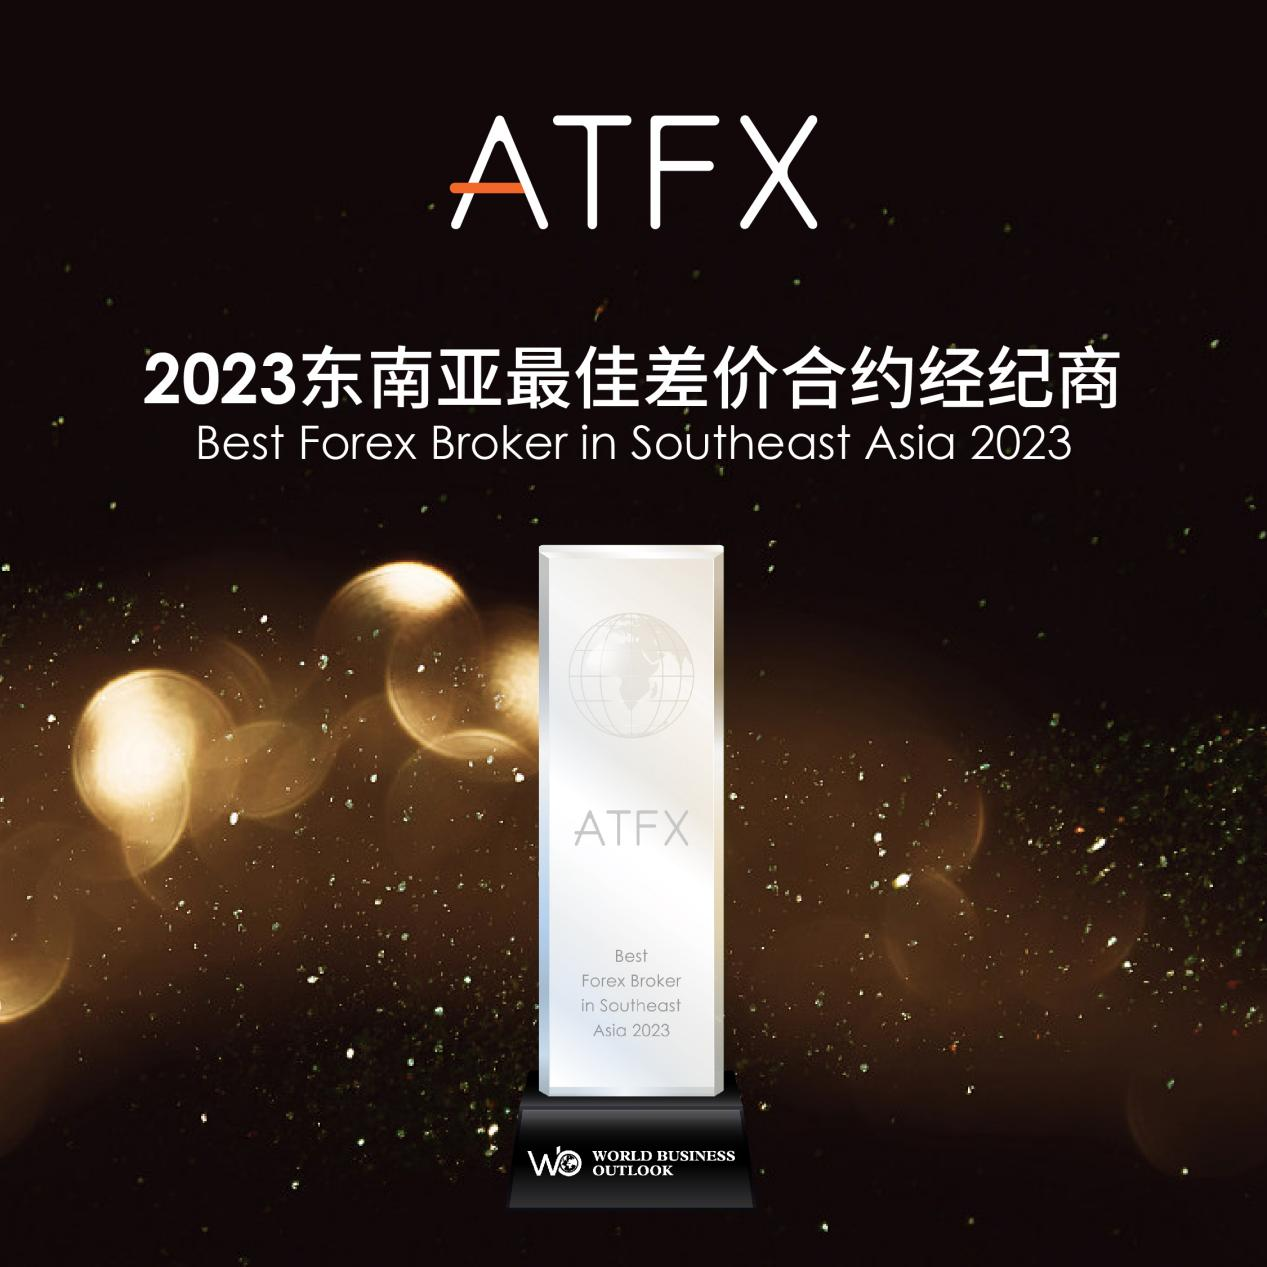 ATFX全球领导力：再次荣获世界级年度大奖，领跑东南亚差价合约市场